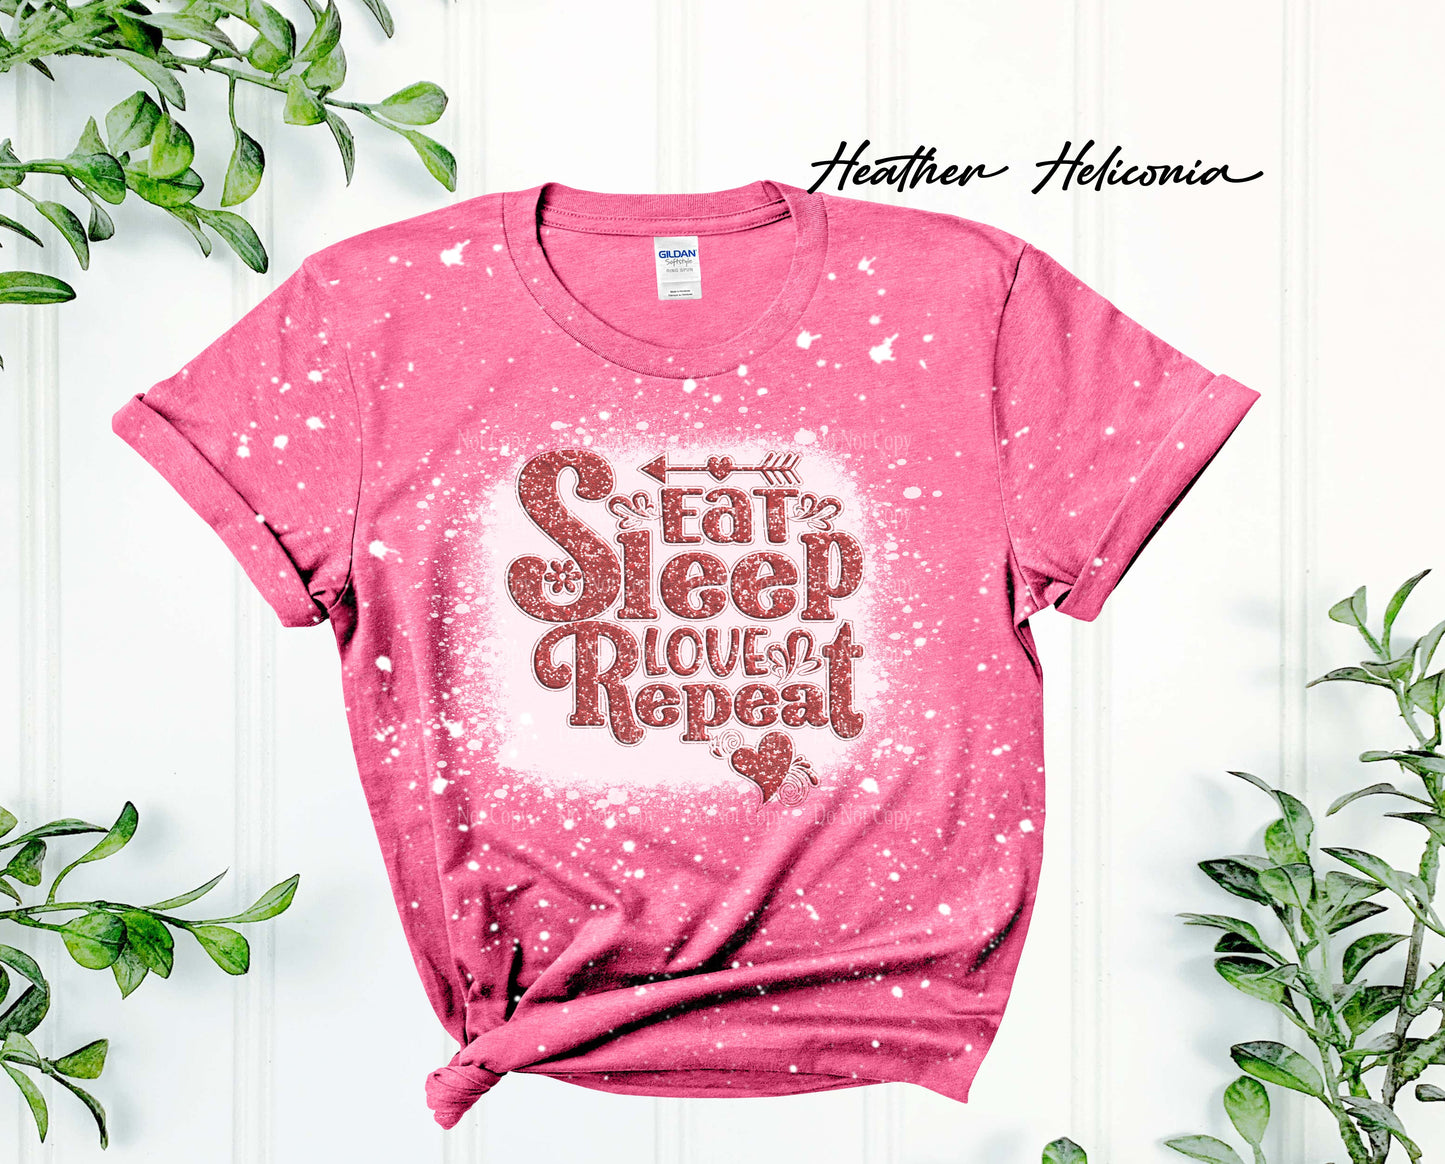 Eat Sleep Love Repeat bleached T-shirt